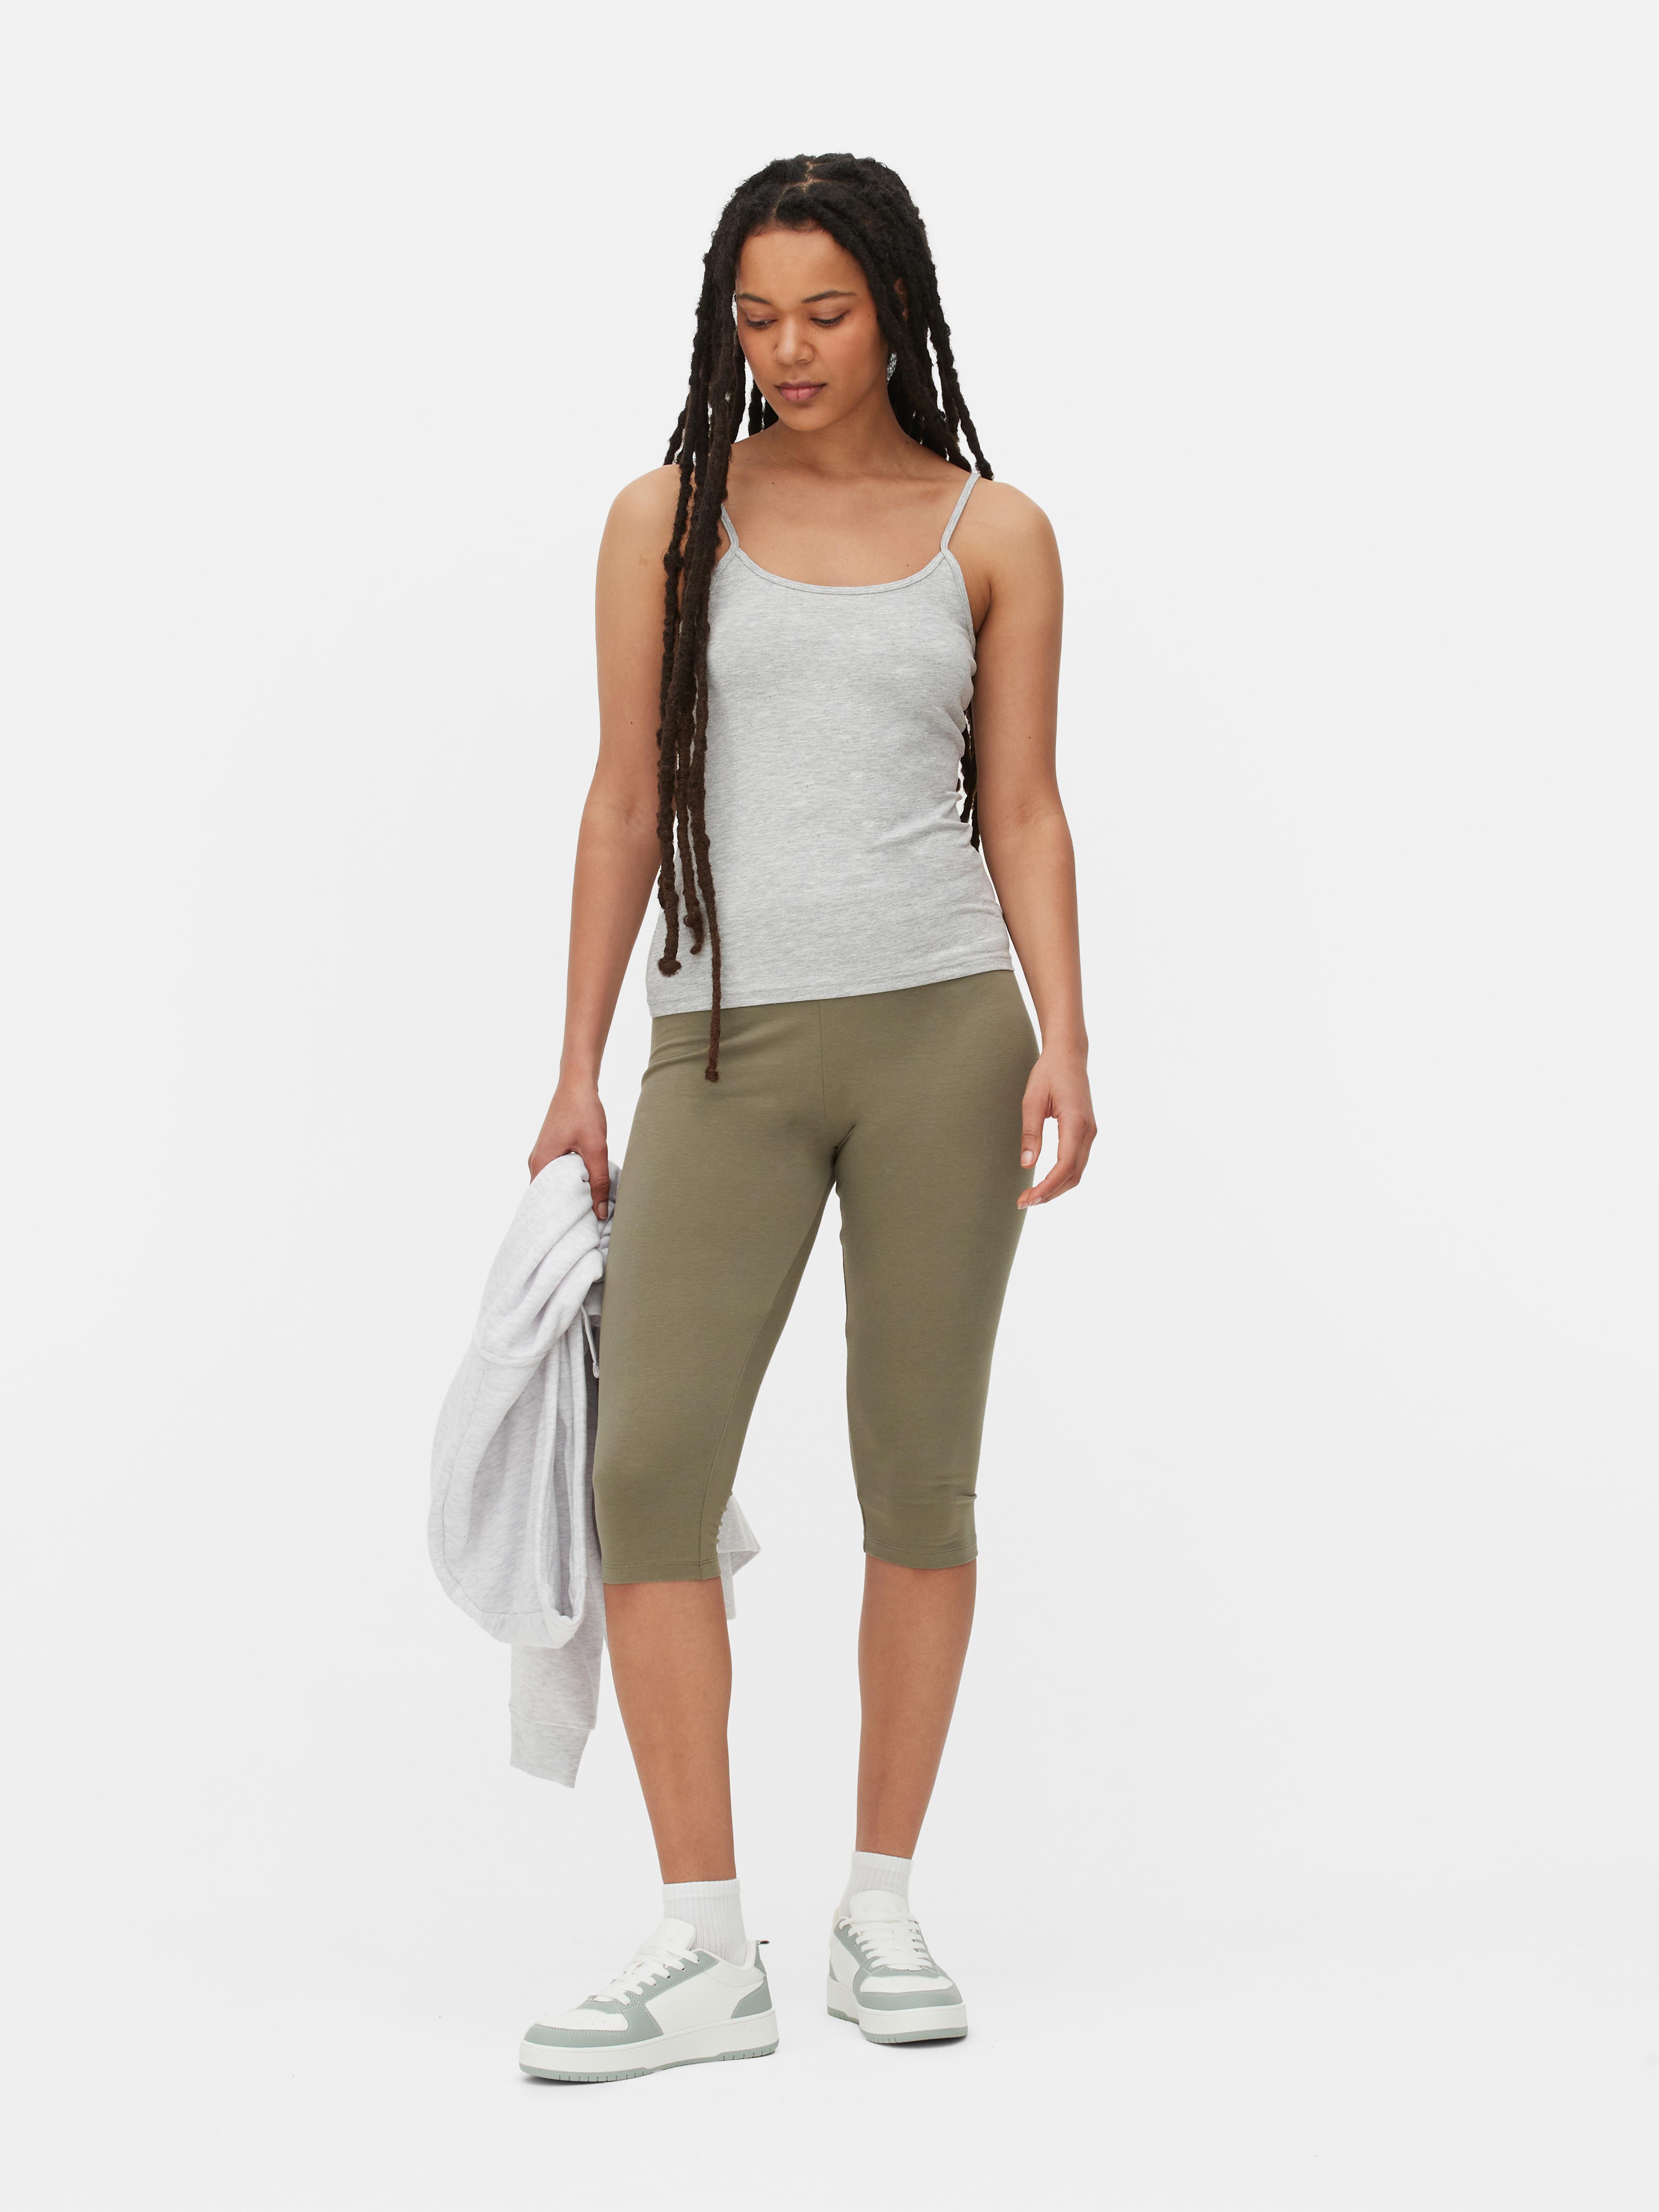 ❤PRIMARK Ladies Girls Stretch Plain Cami Vest Adjustable Straps Top Size  4-24